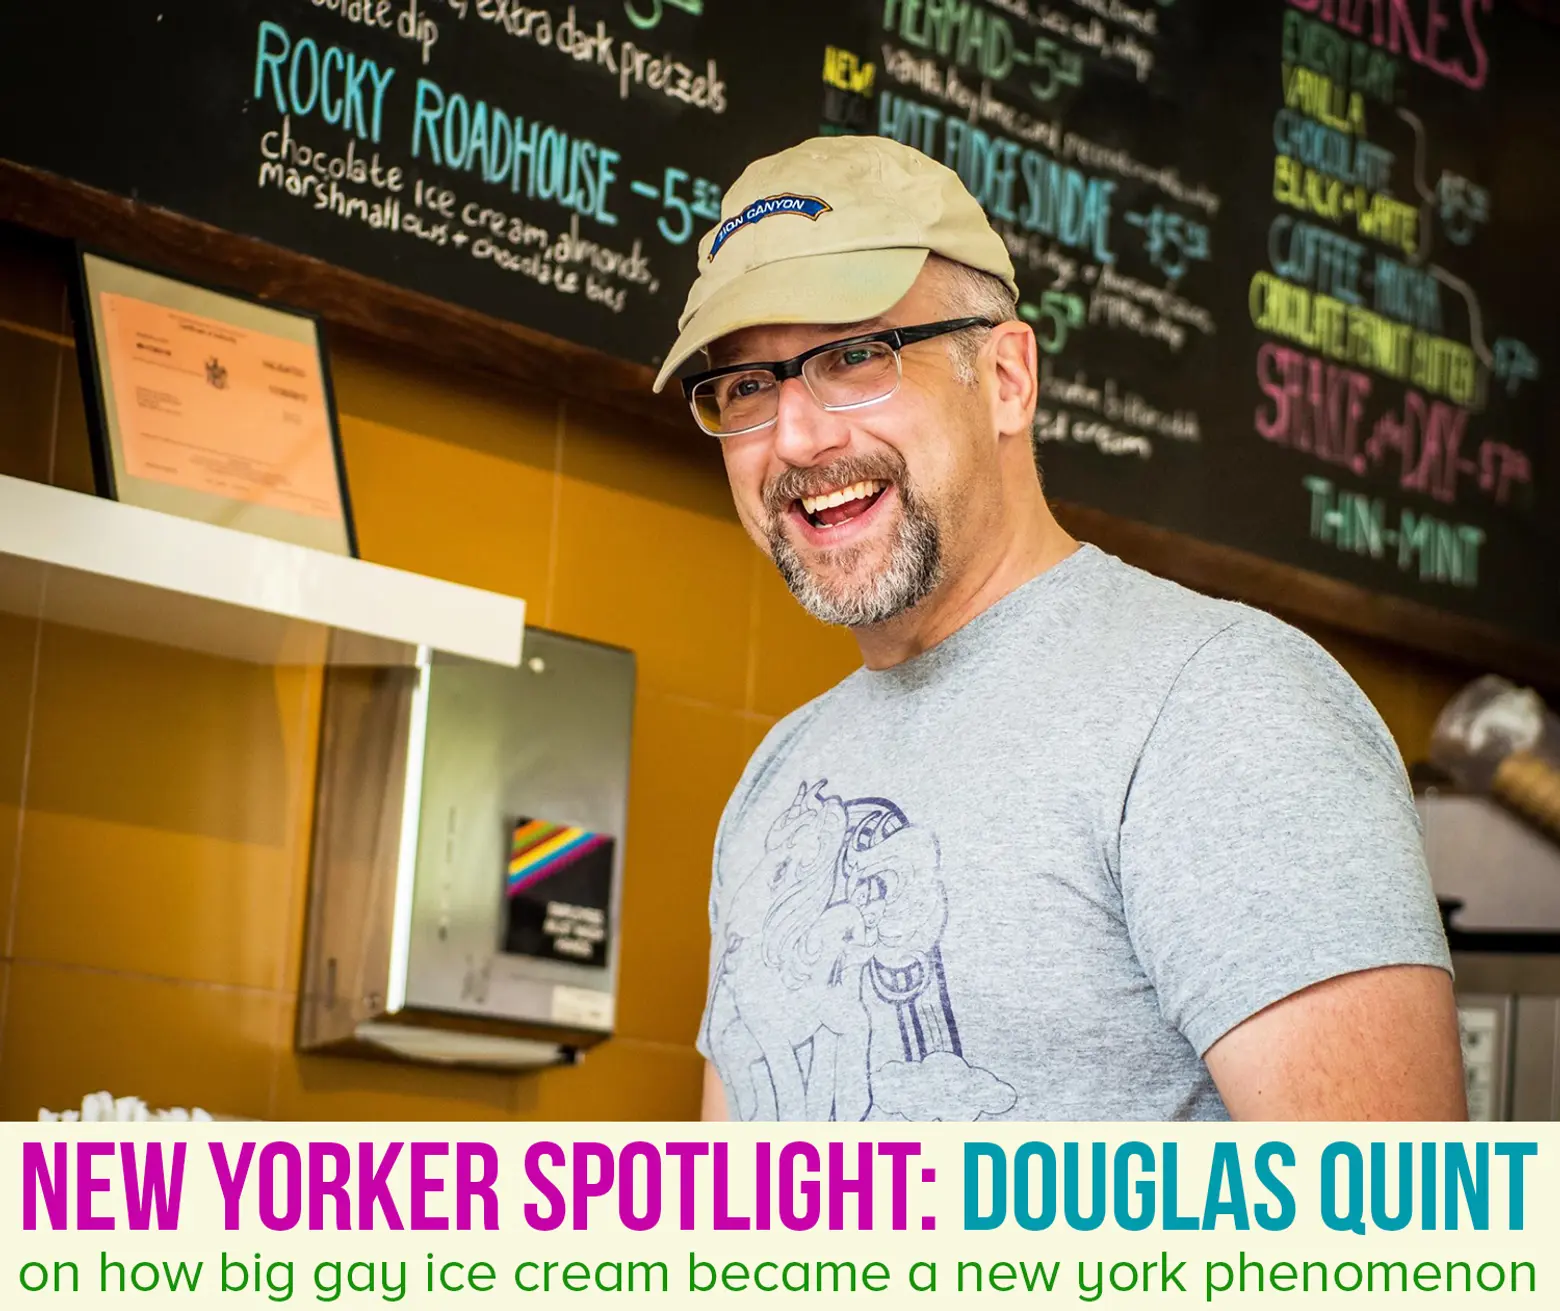 Spotlight: Douglas Quint on How Big Gay Ice Cream Became a New York Foodie Phenomenon